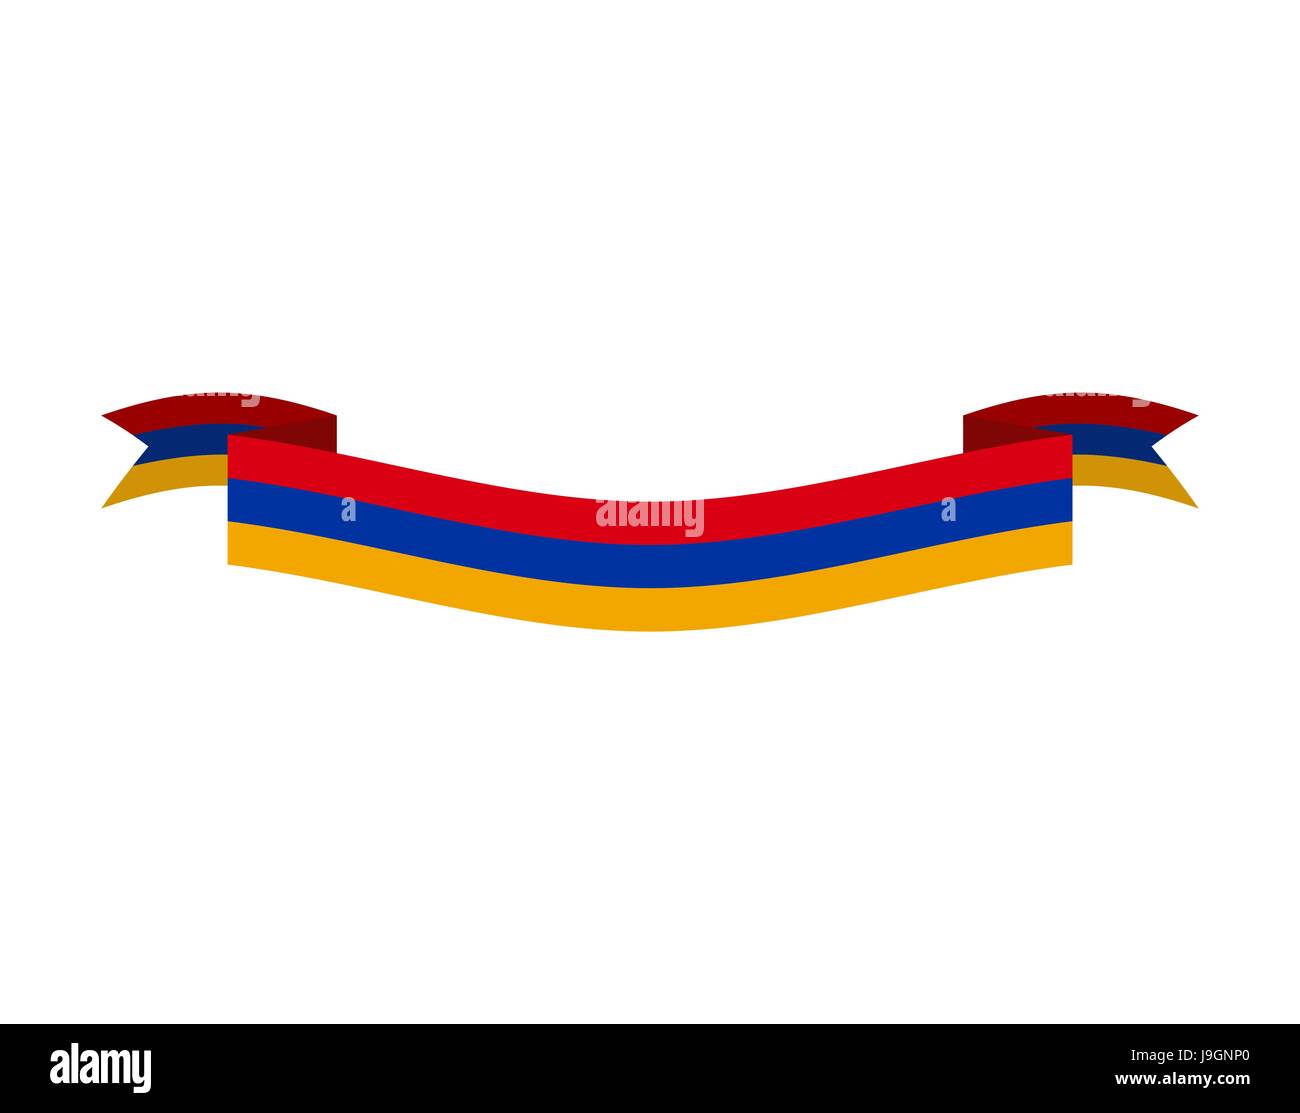 armenian national symbols